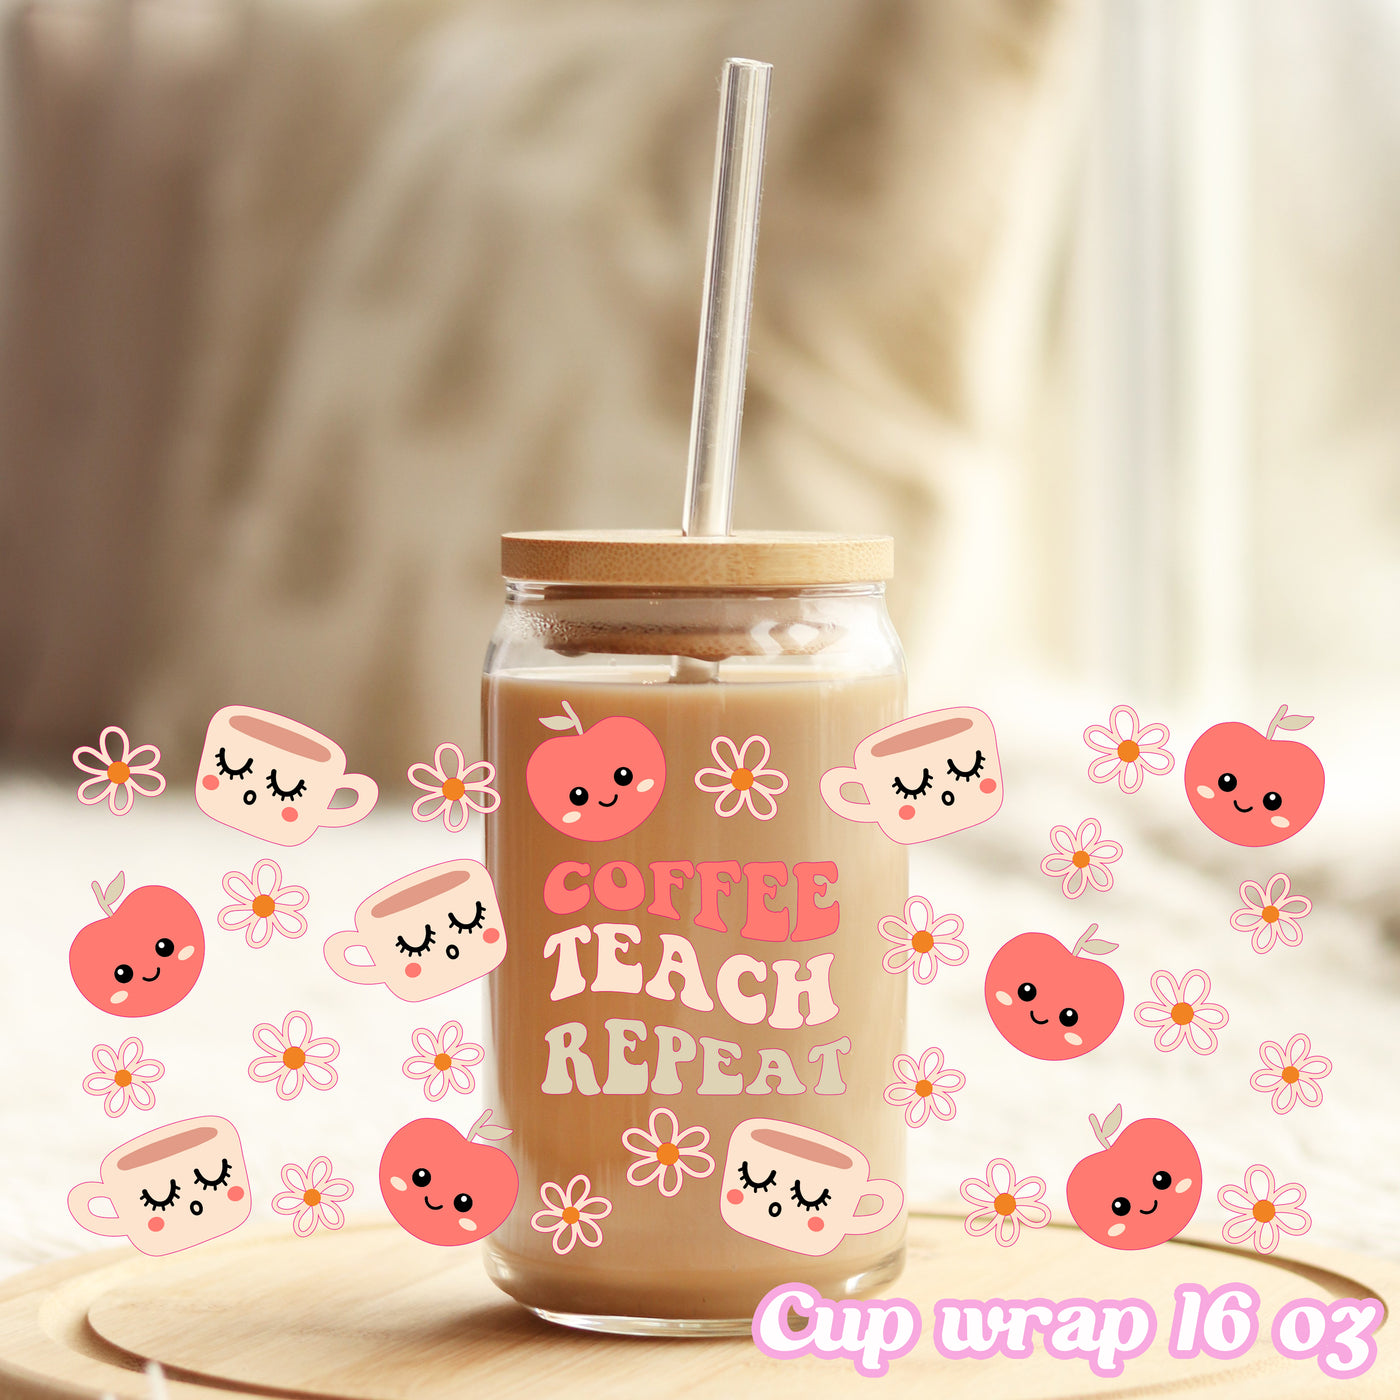 Coffee teach repeat teacher school - 16oz Libbey Glass Cup Wrap Only